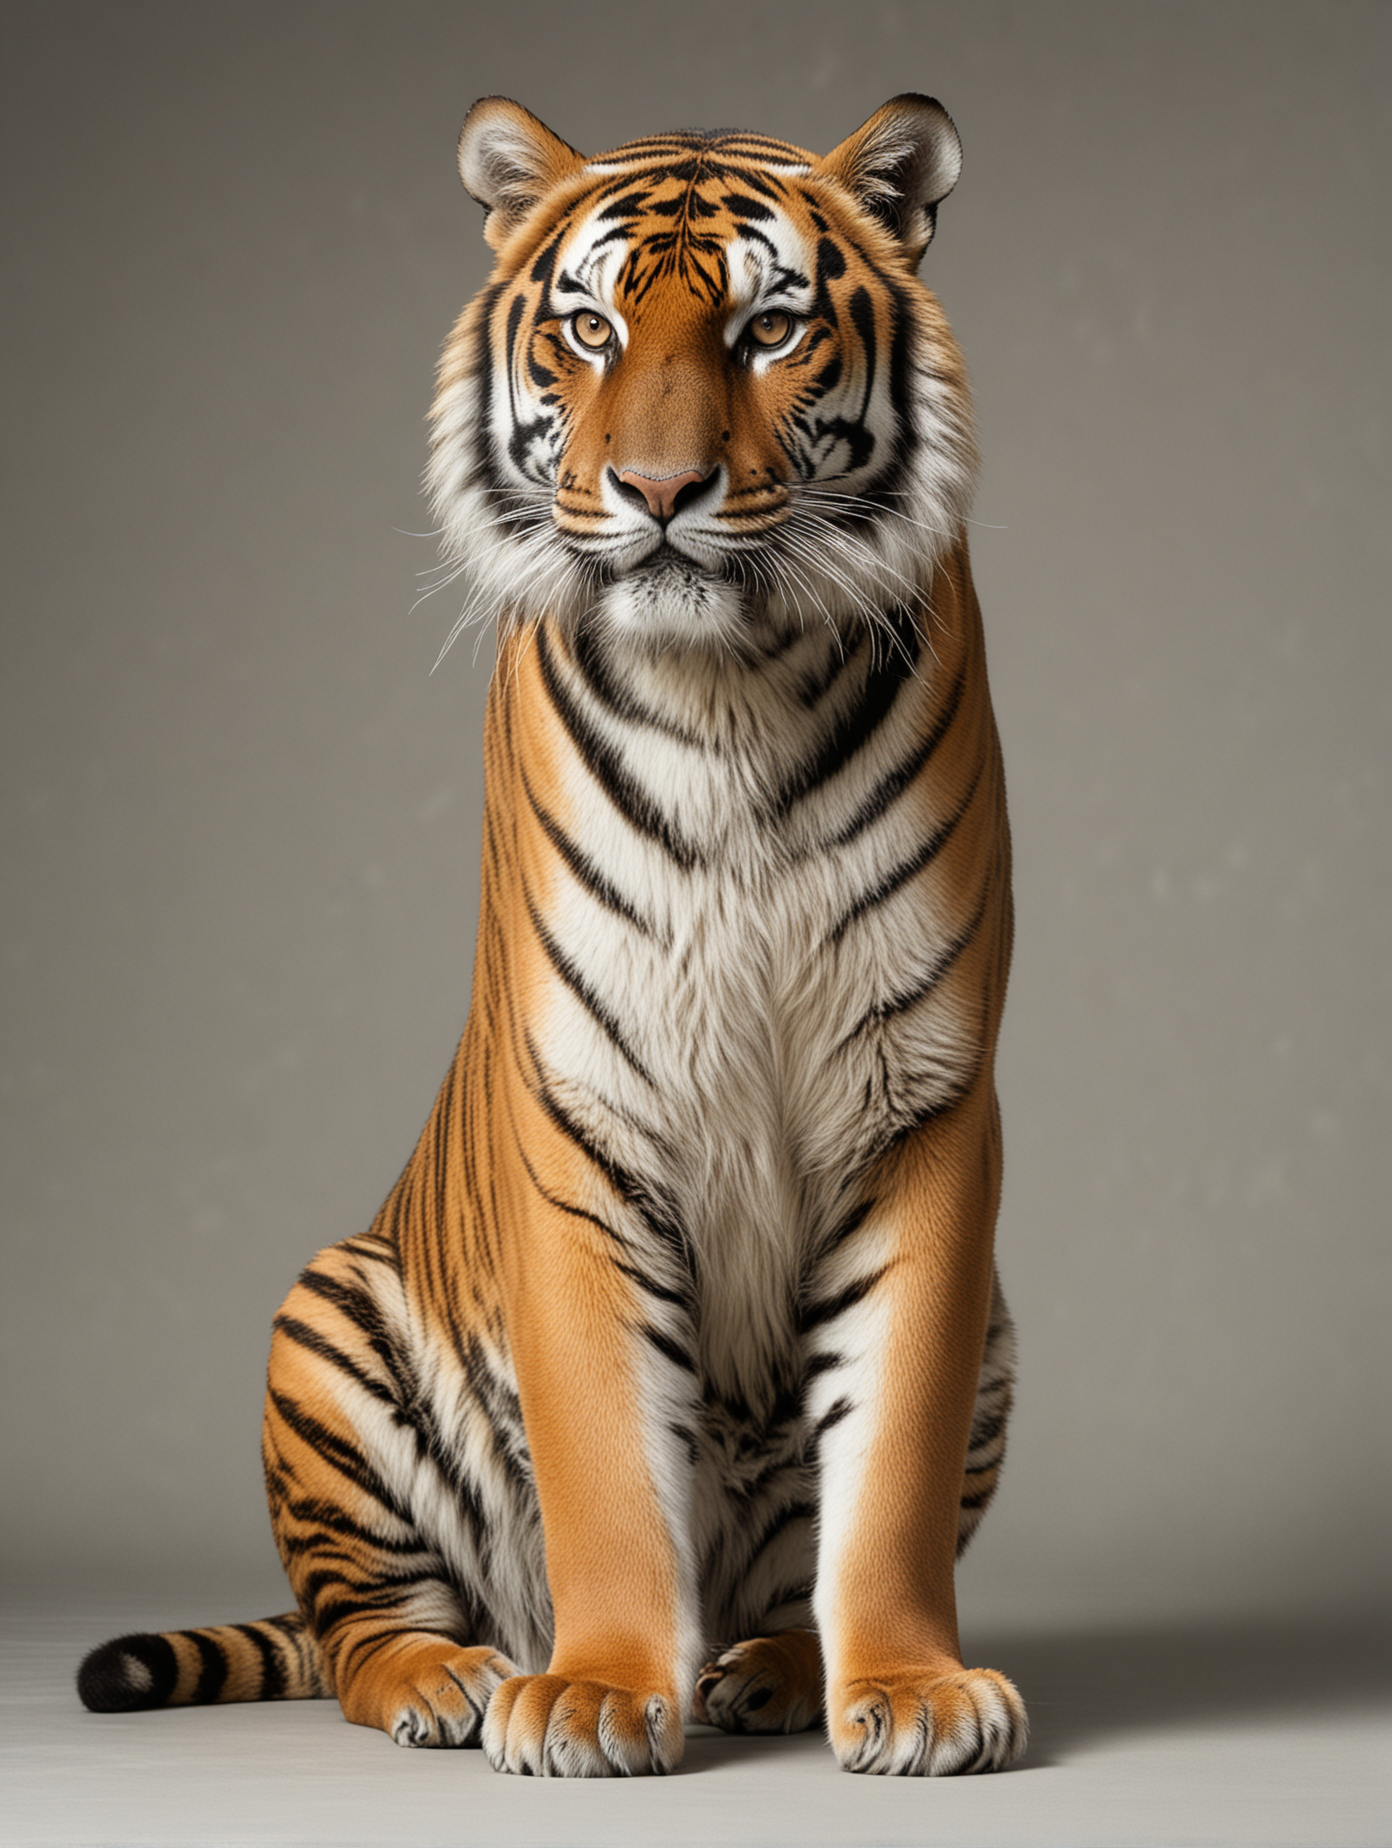 Majestic Tiger Sitting in Studio Environment